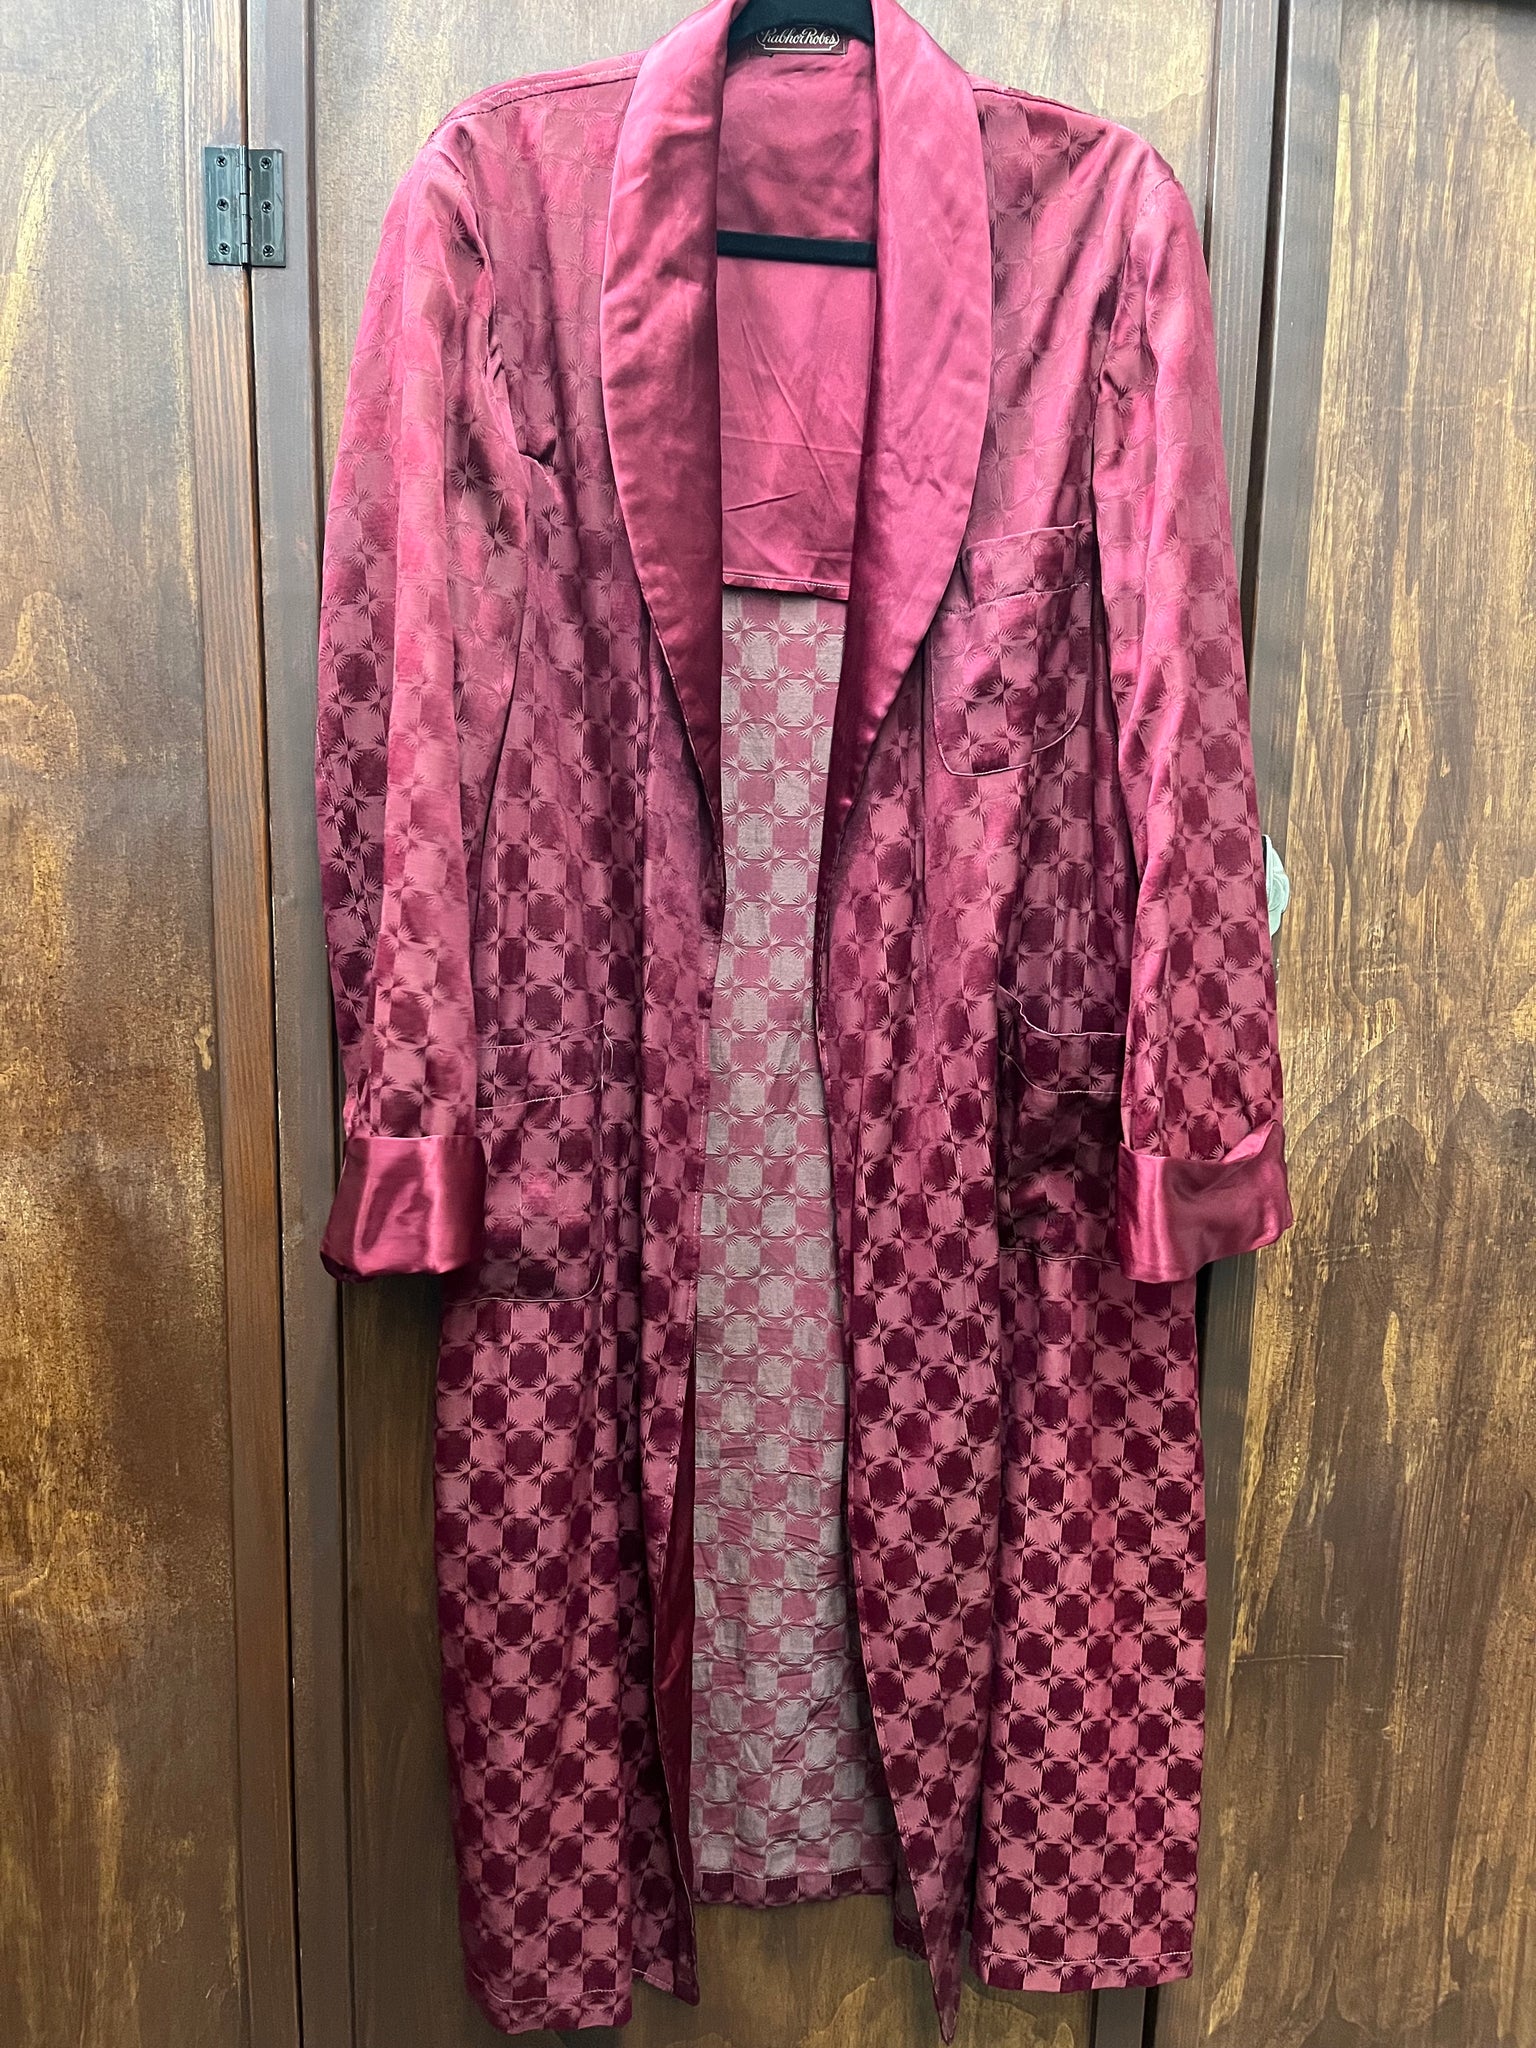 1960s MENS ROBE- Rabhor Robes Burgundy silk jacuard